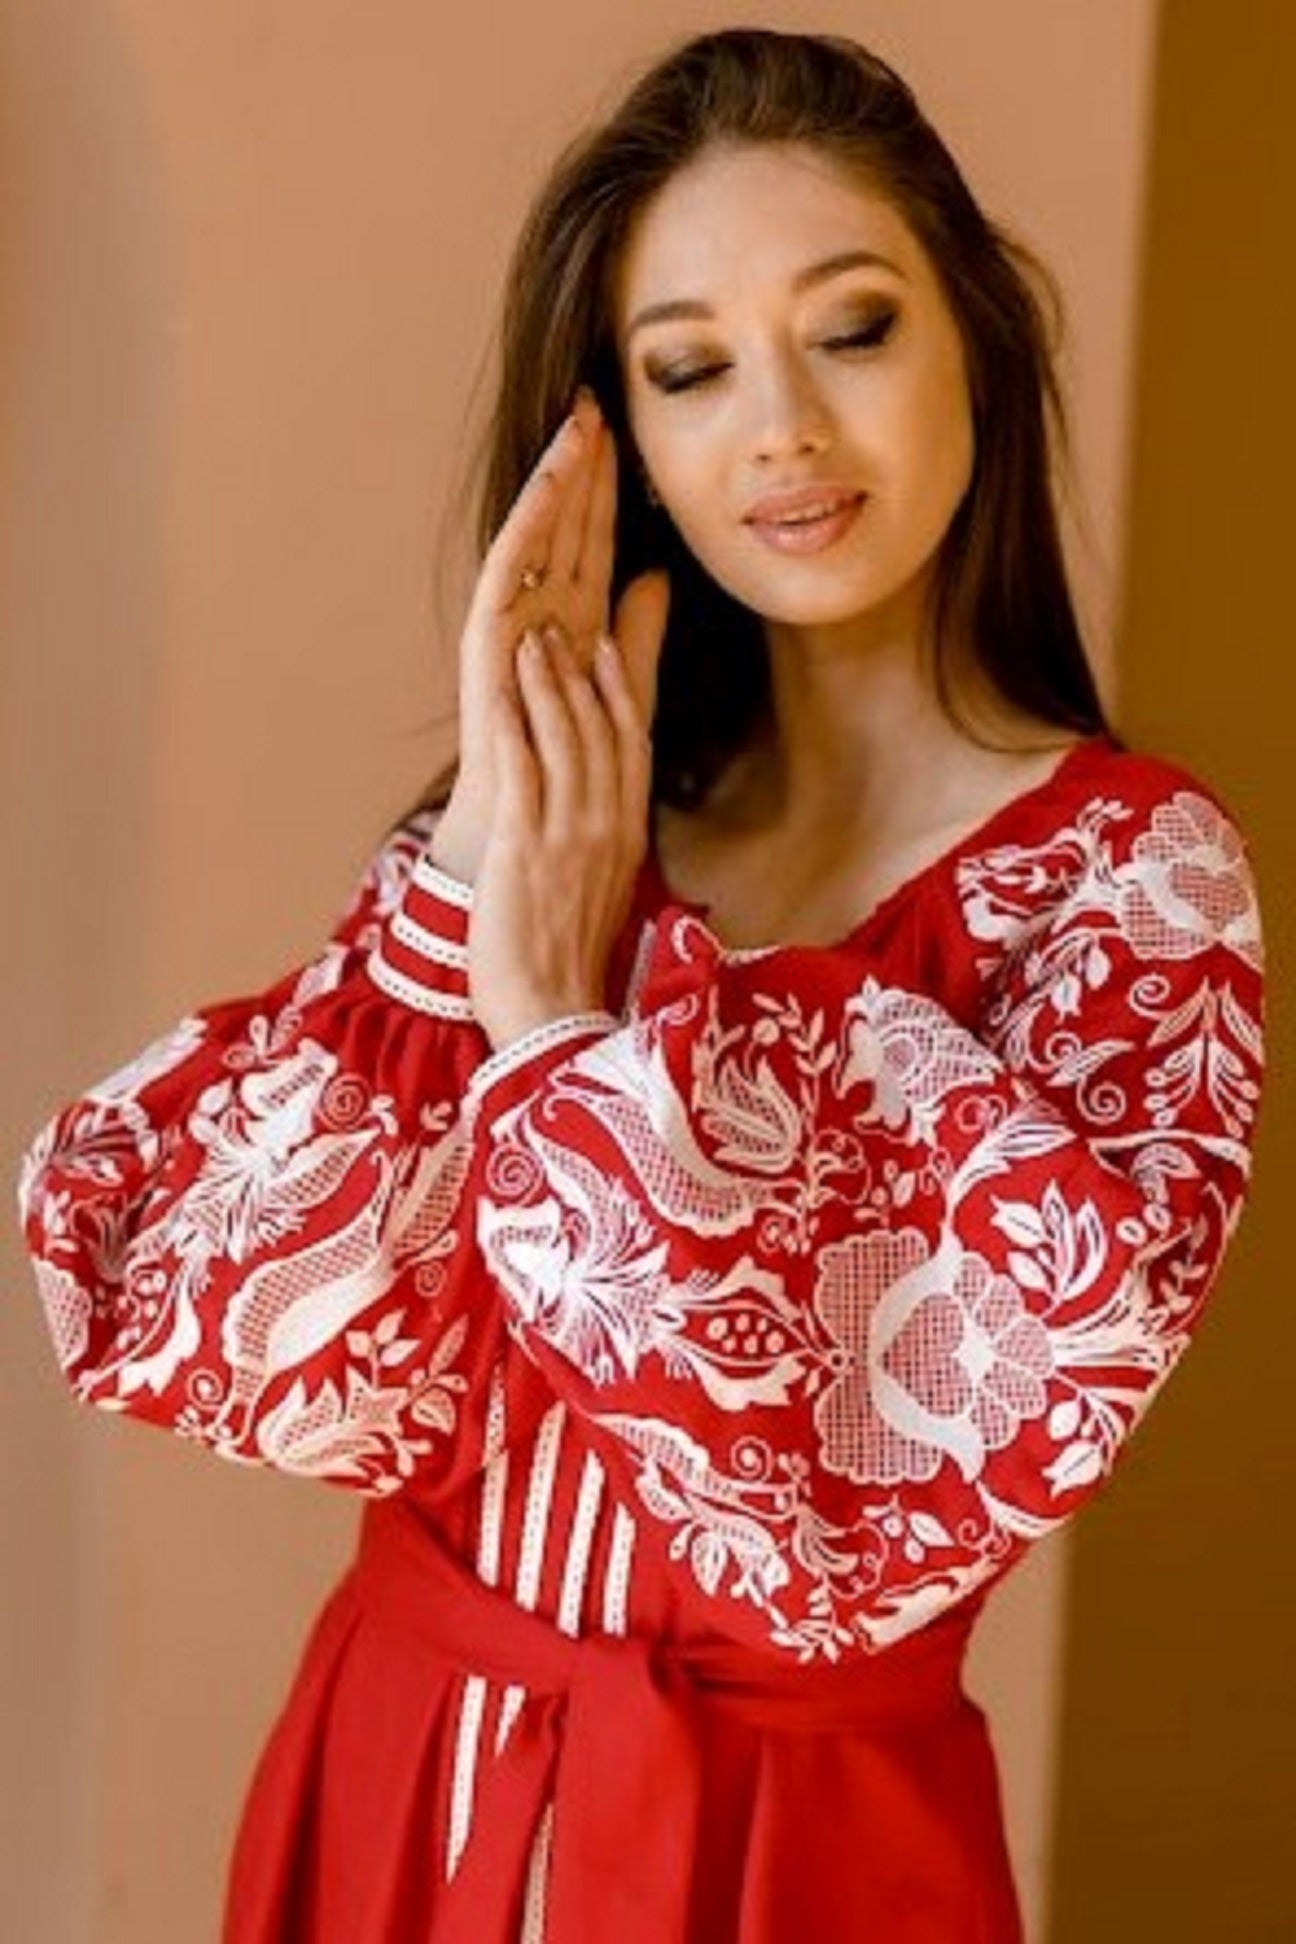 Ukrainian long embroidered dress "Roksolana" red